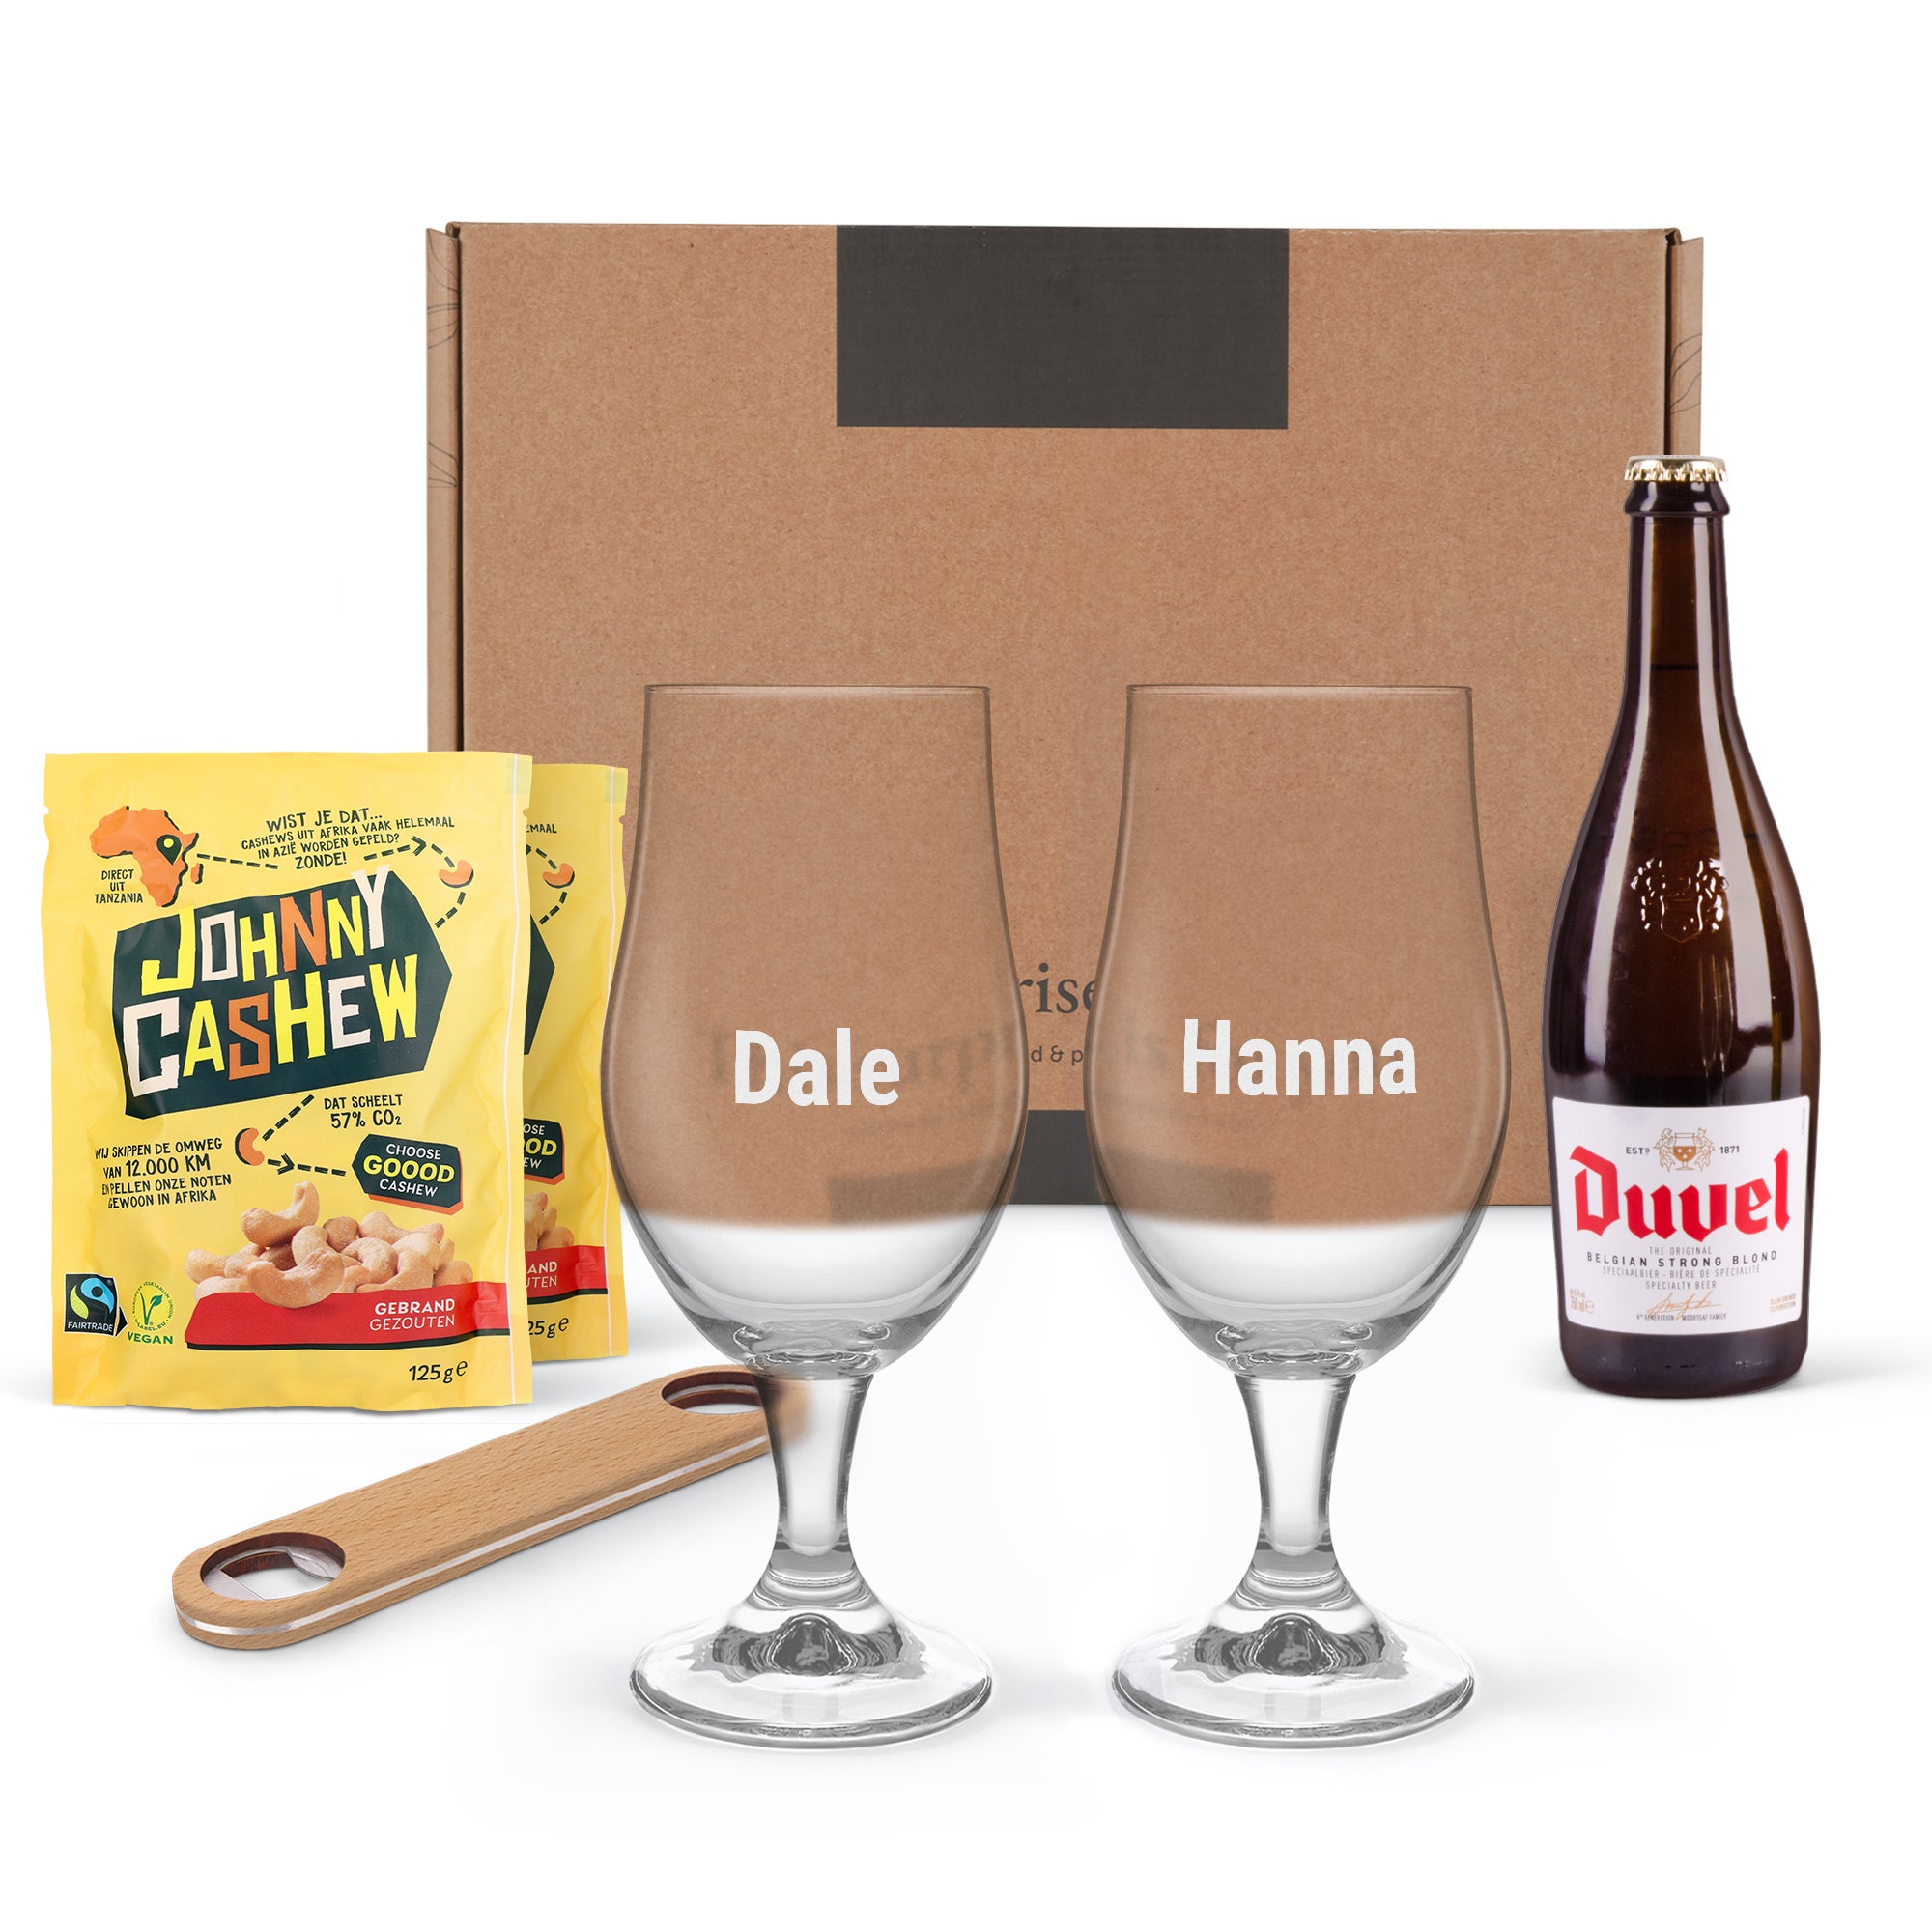 Beer & snacks gift set - Engraved glasses